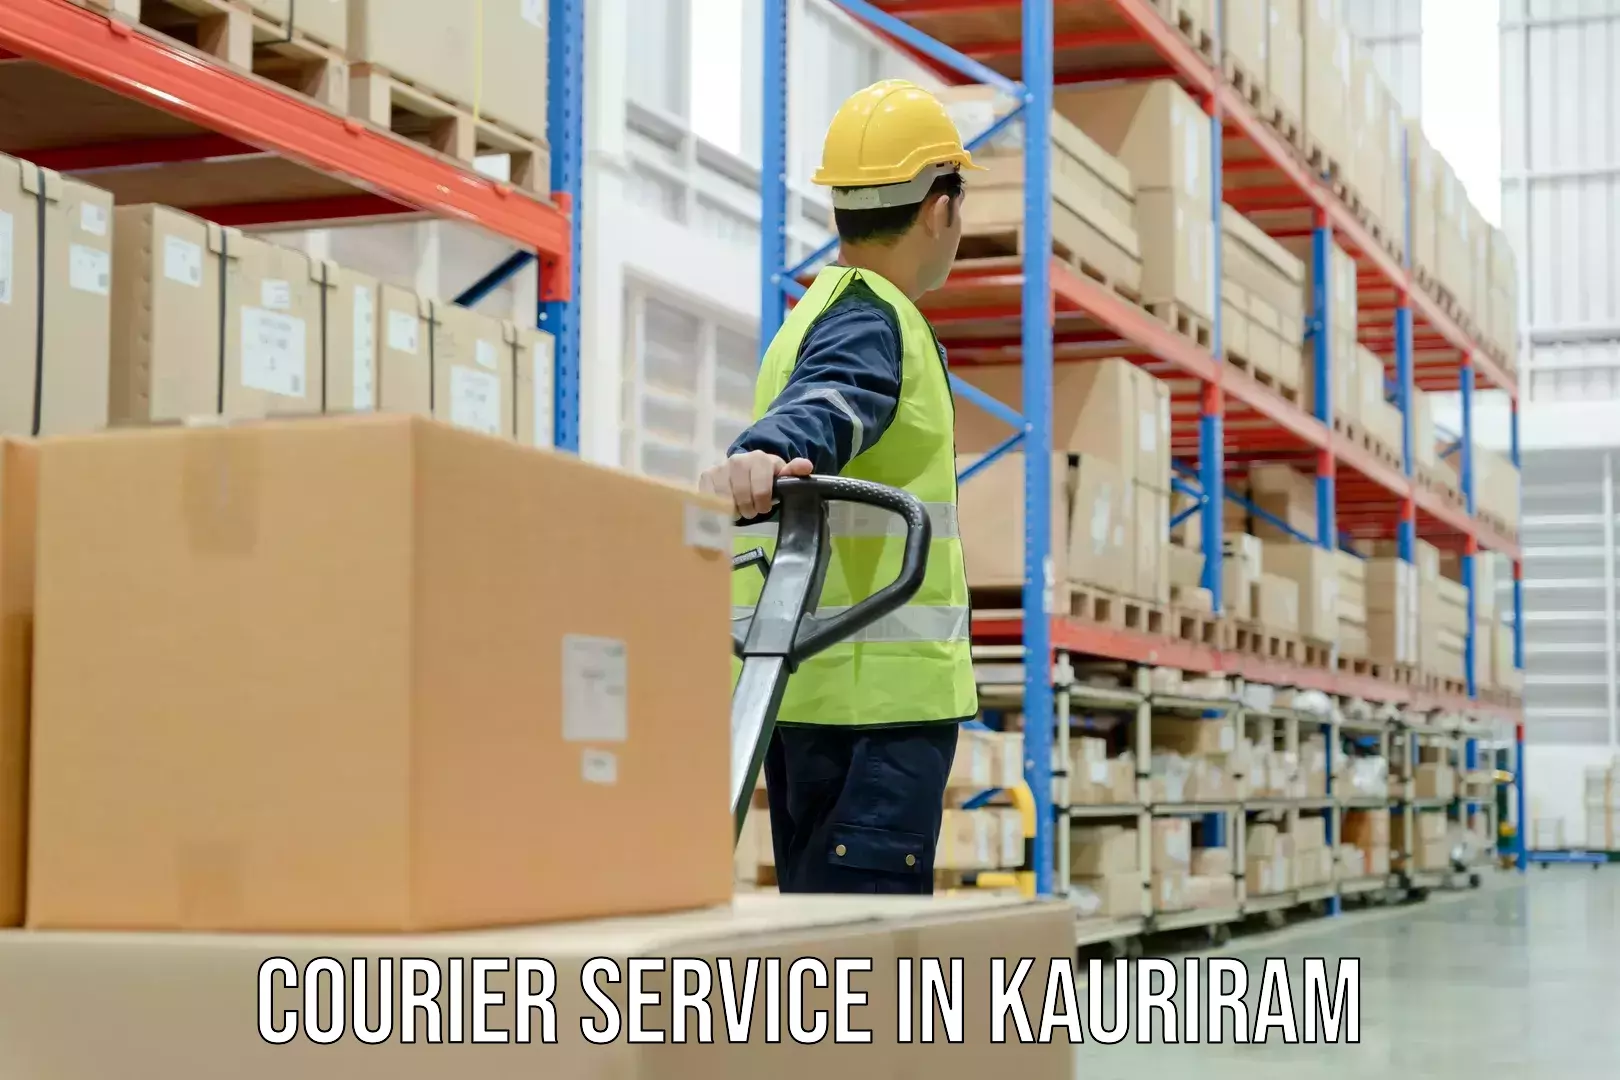 Customer-focused courier in Kauriram